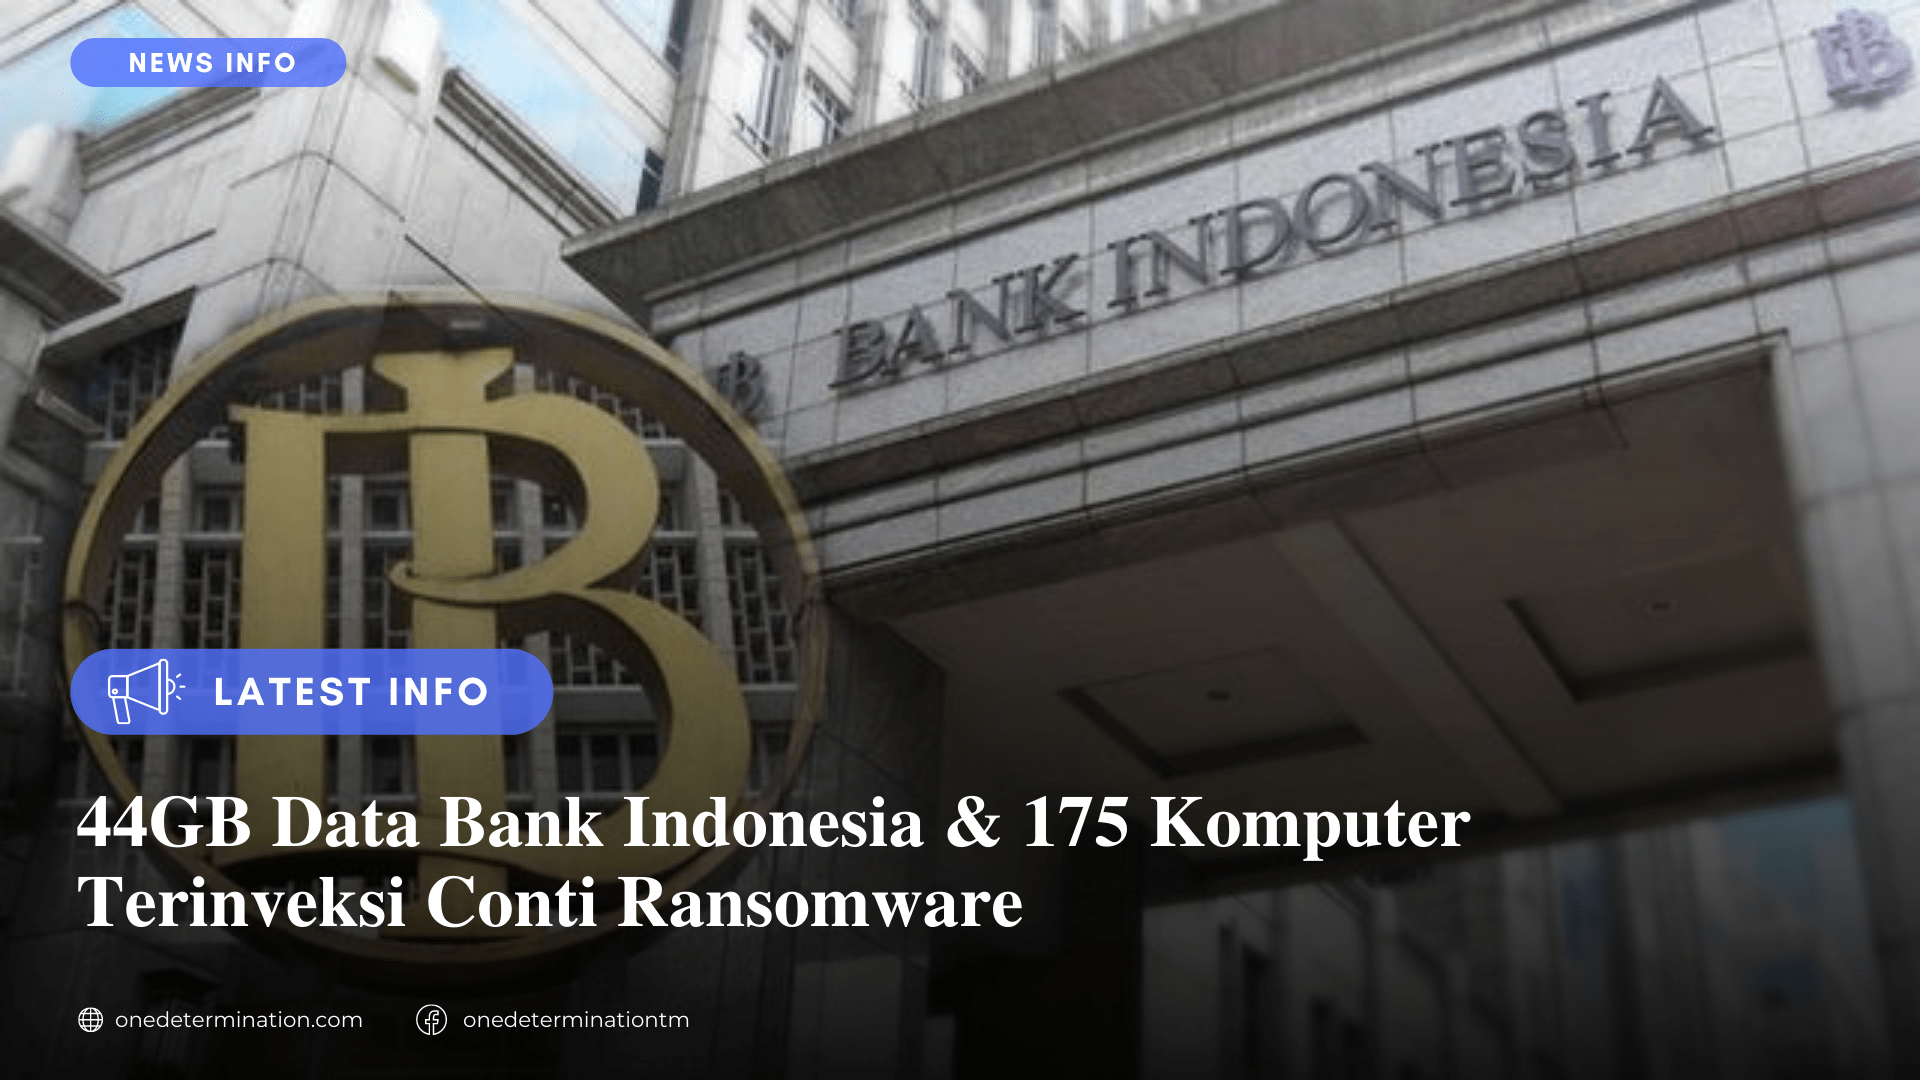 44GB Data Bank Indonesia & 175 Komputer Terinveksi Conti Ransomware